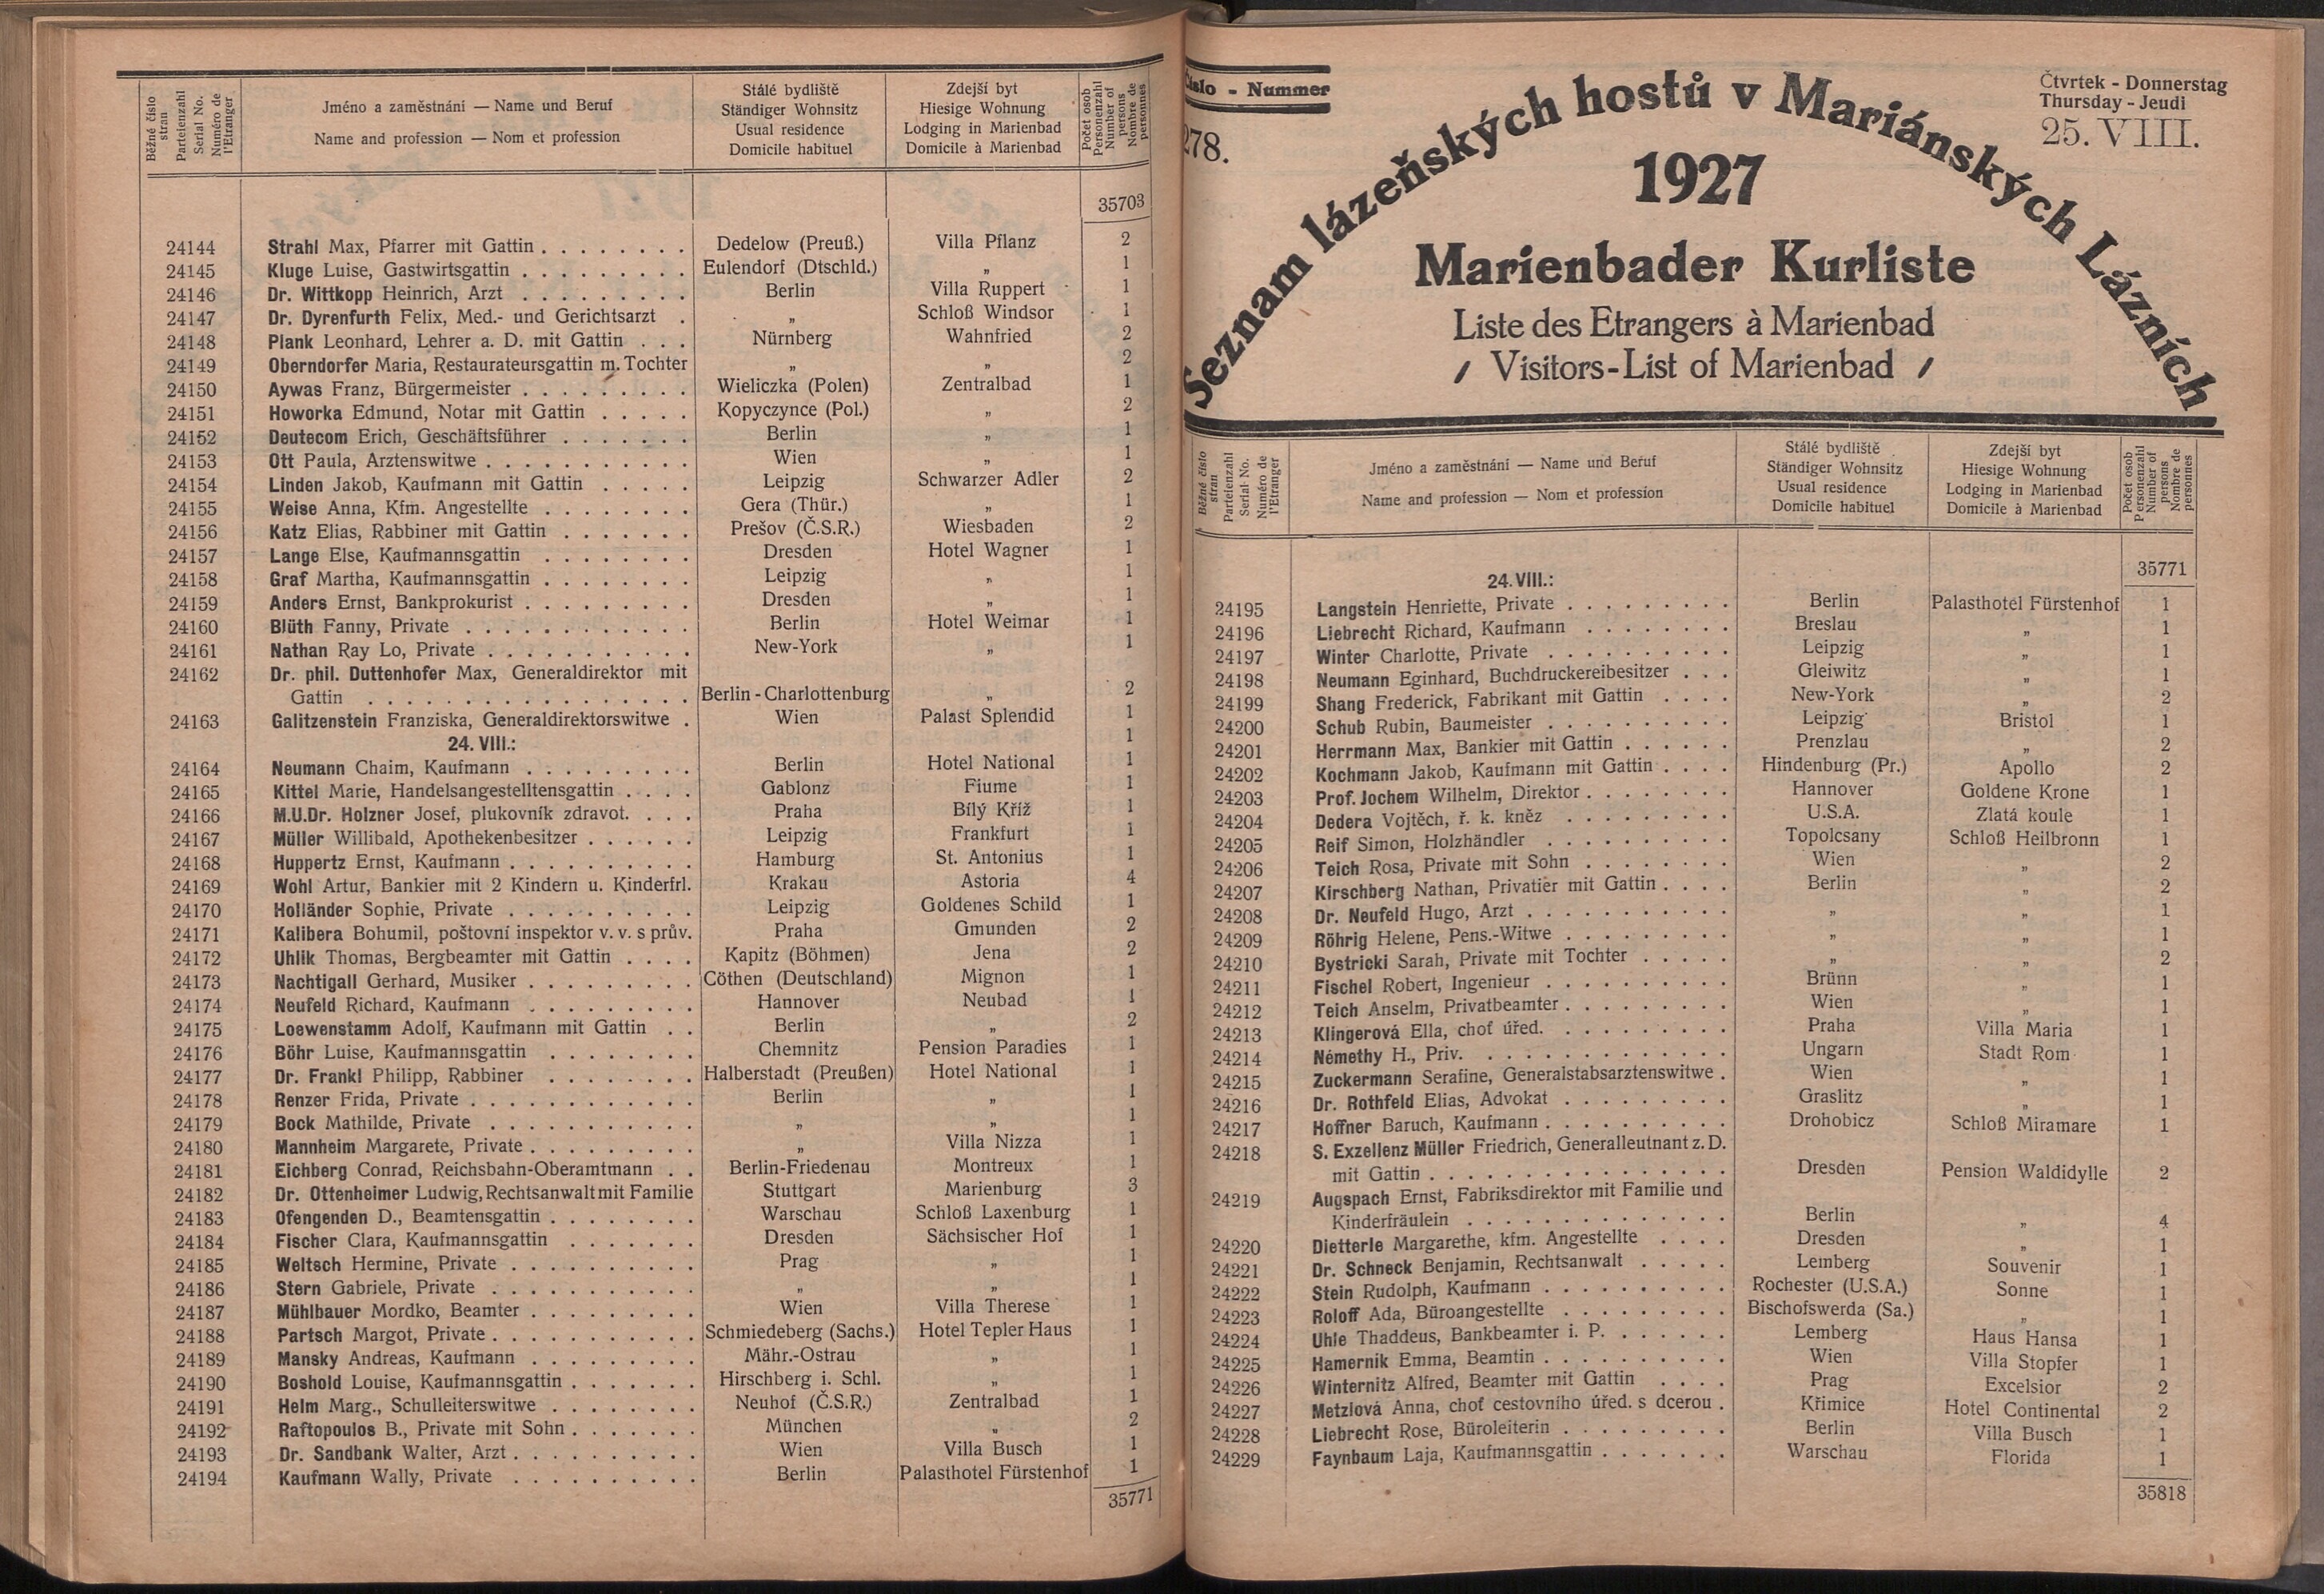 359. soap-ch_knihovna_marienbader-kurliste-1927_3590